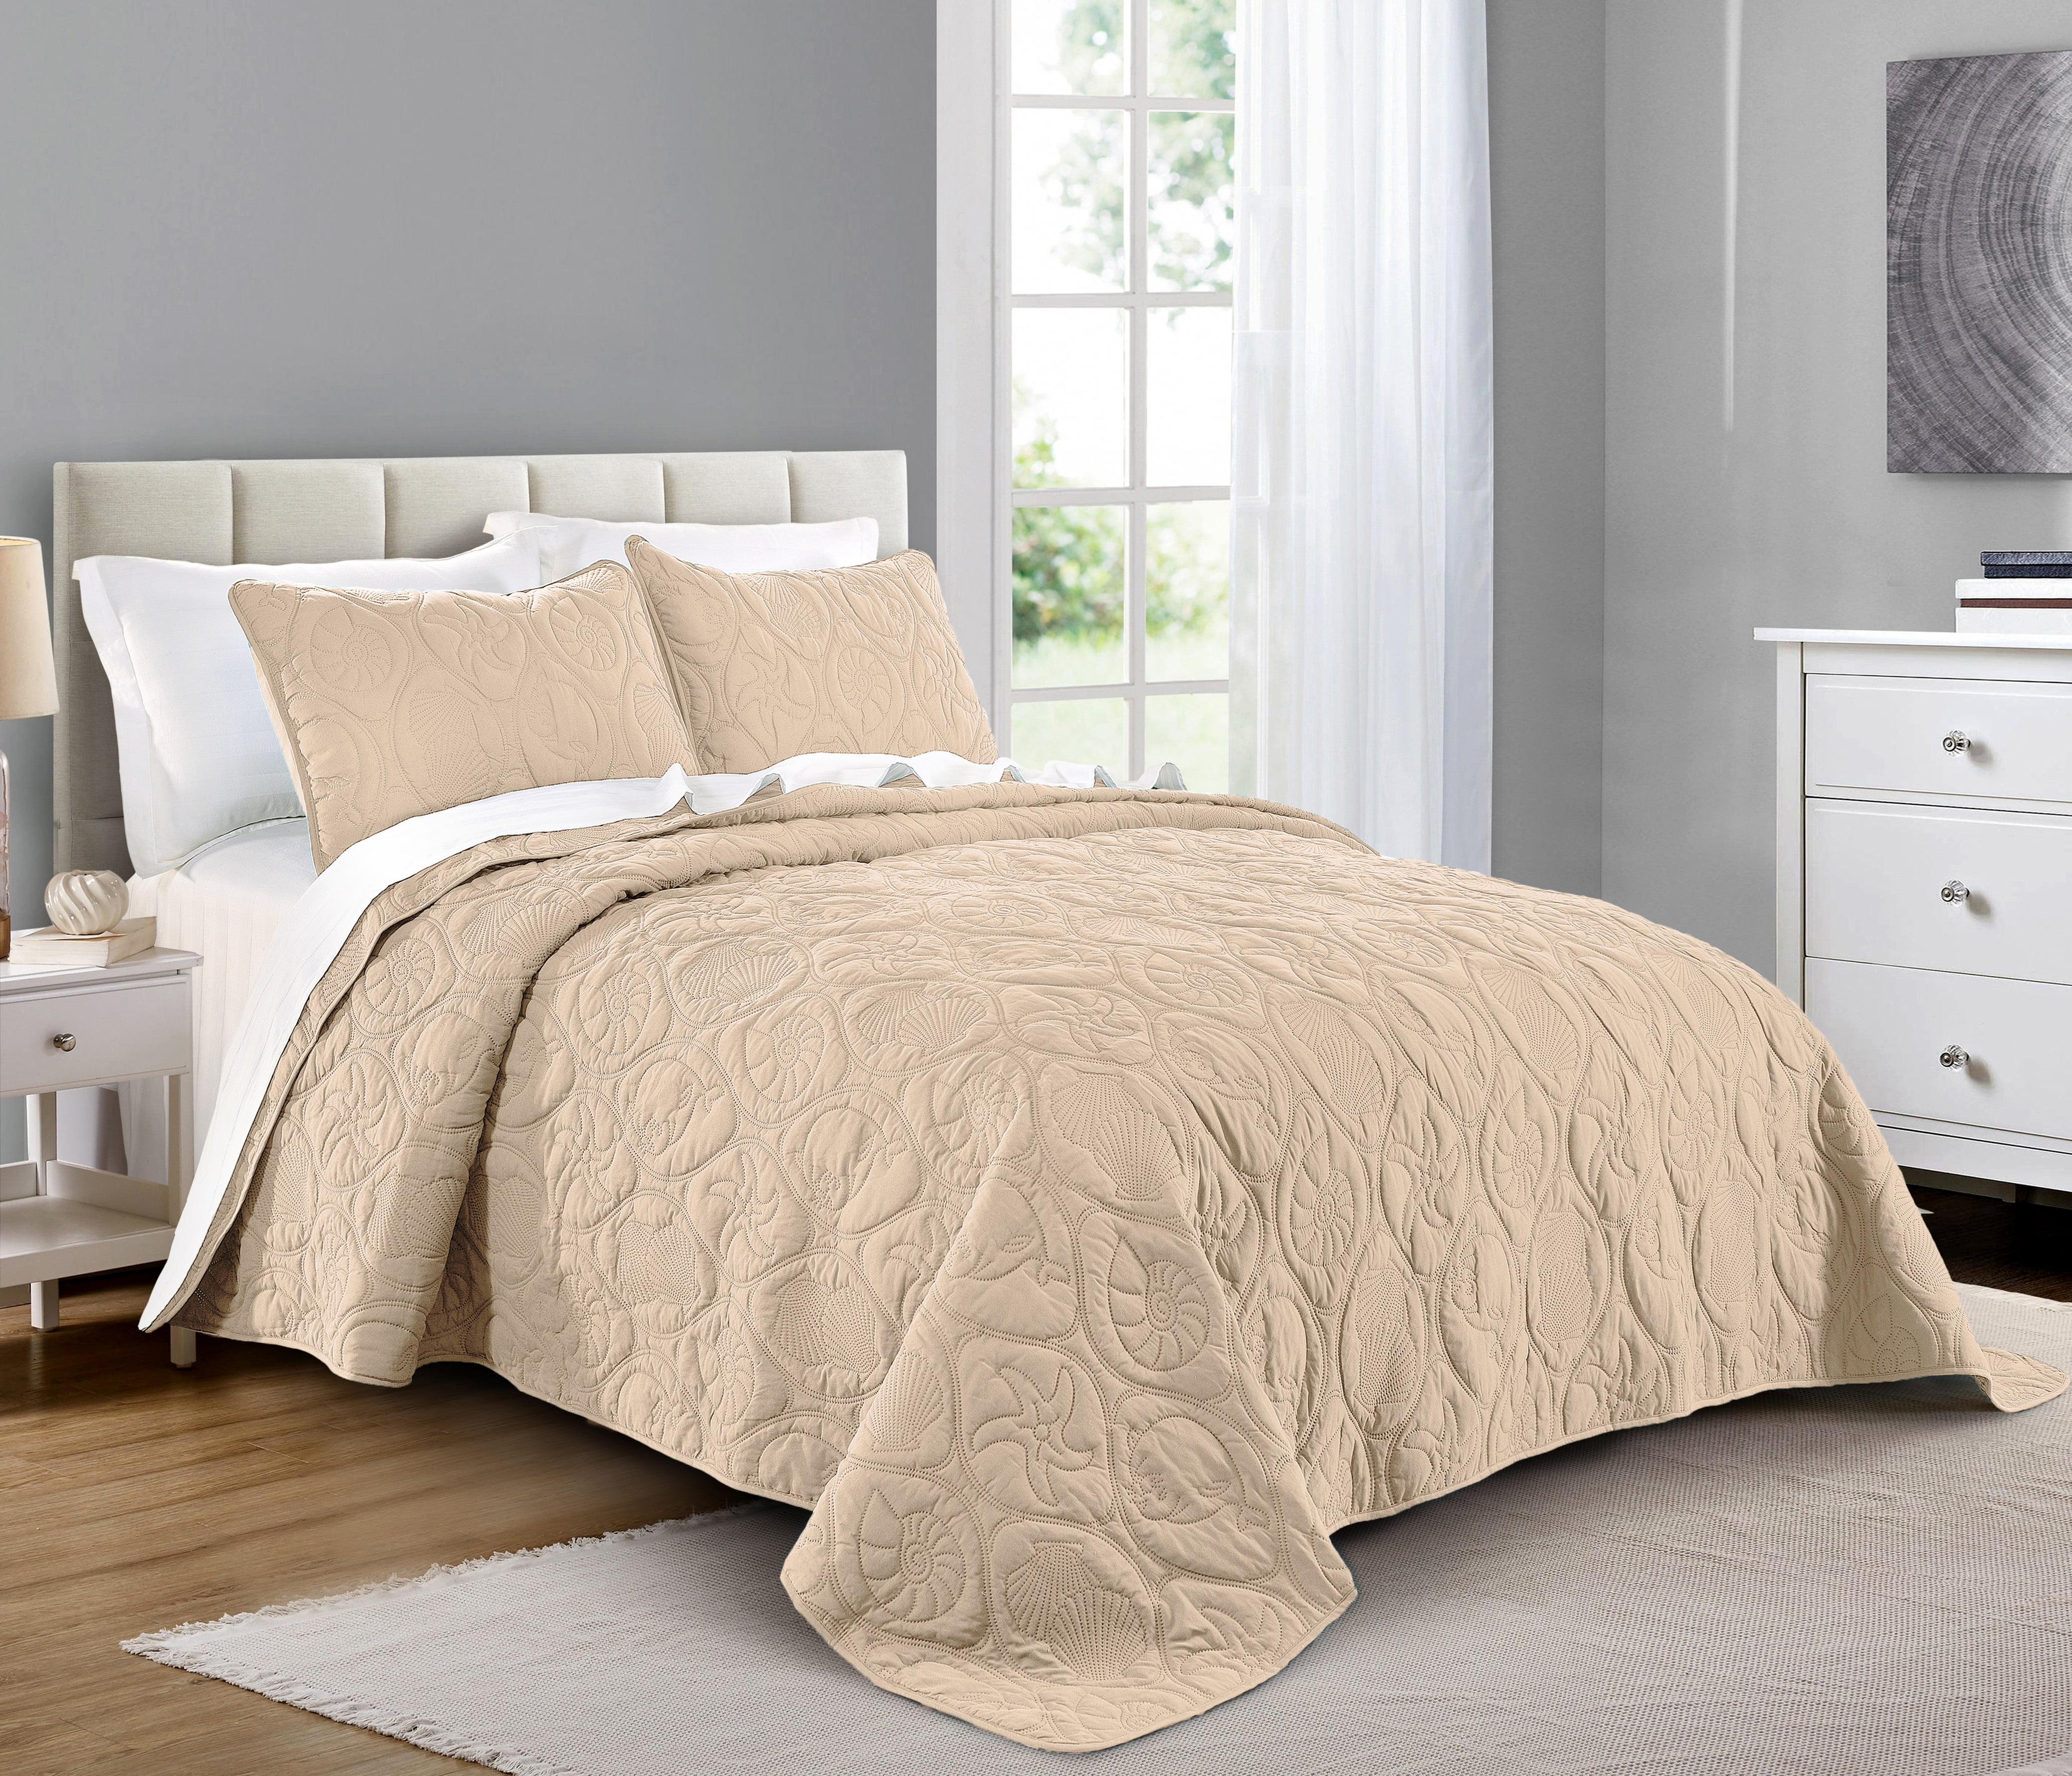 Details about   3 Piece Lightweight Quilt Bedspread Set Bedding Coverlet Set Oversize 